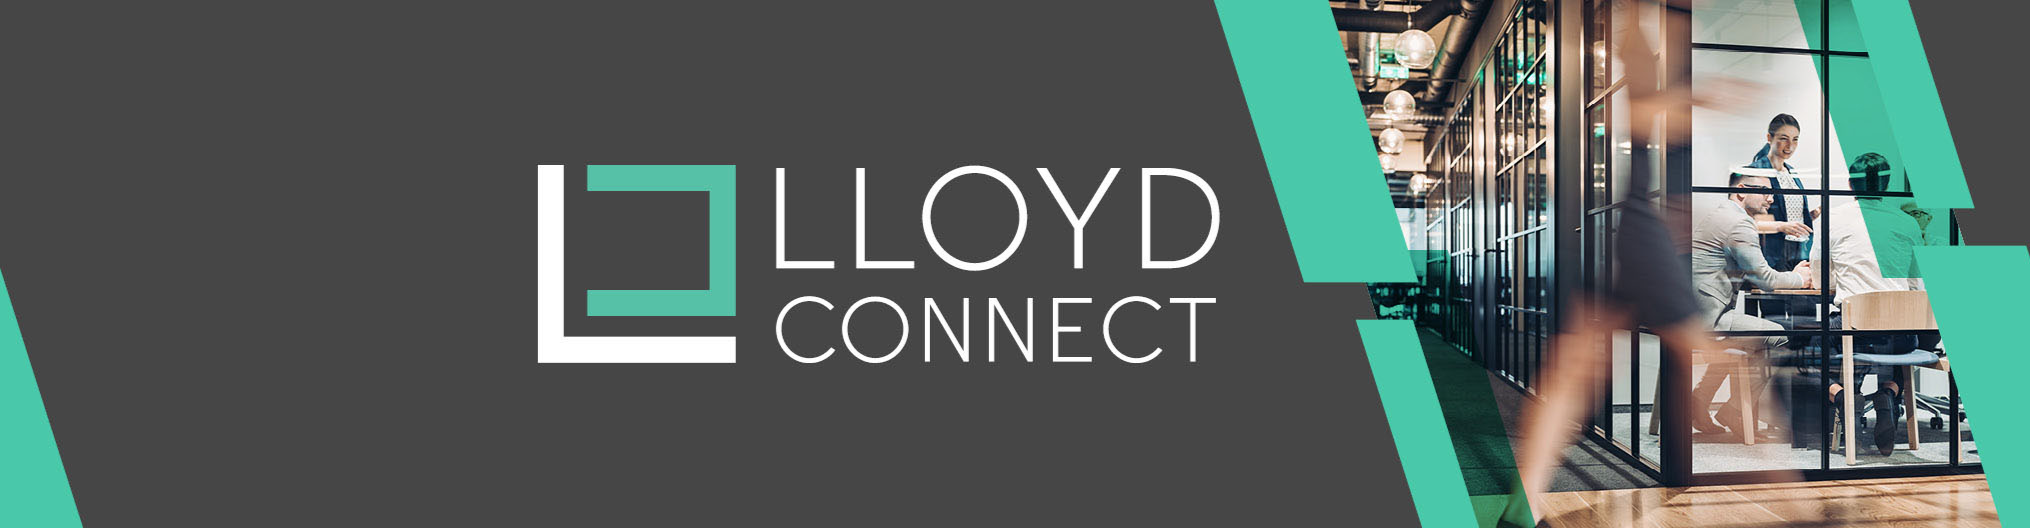 Lloyd Connect banner